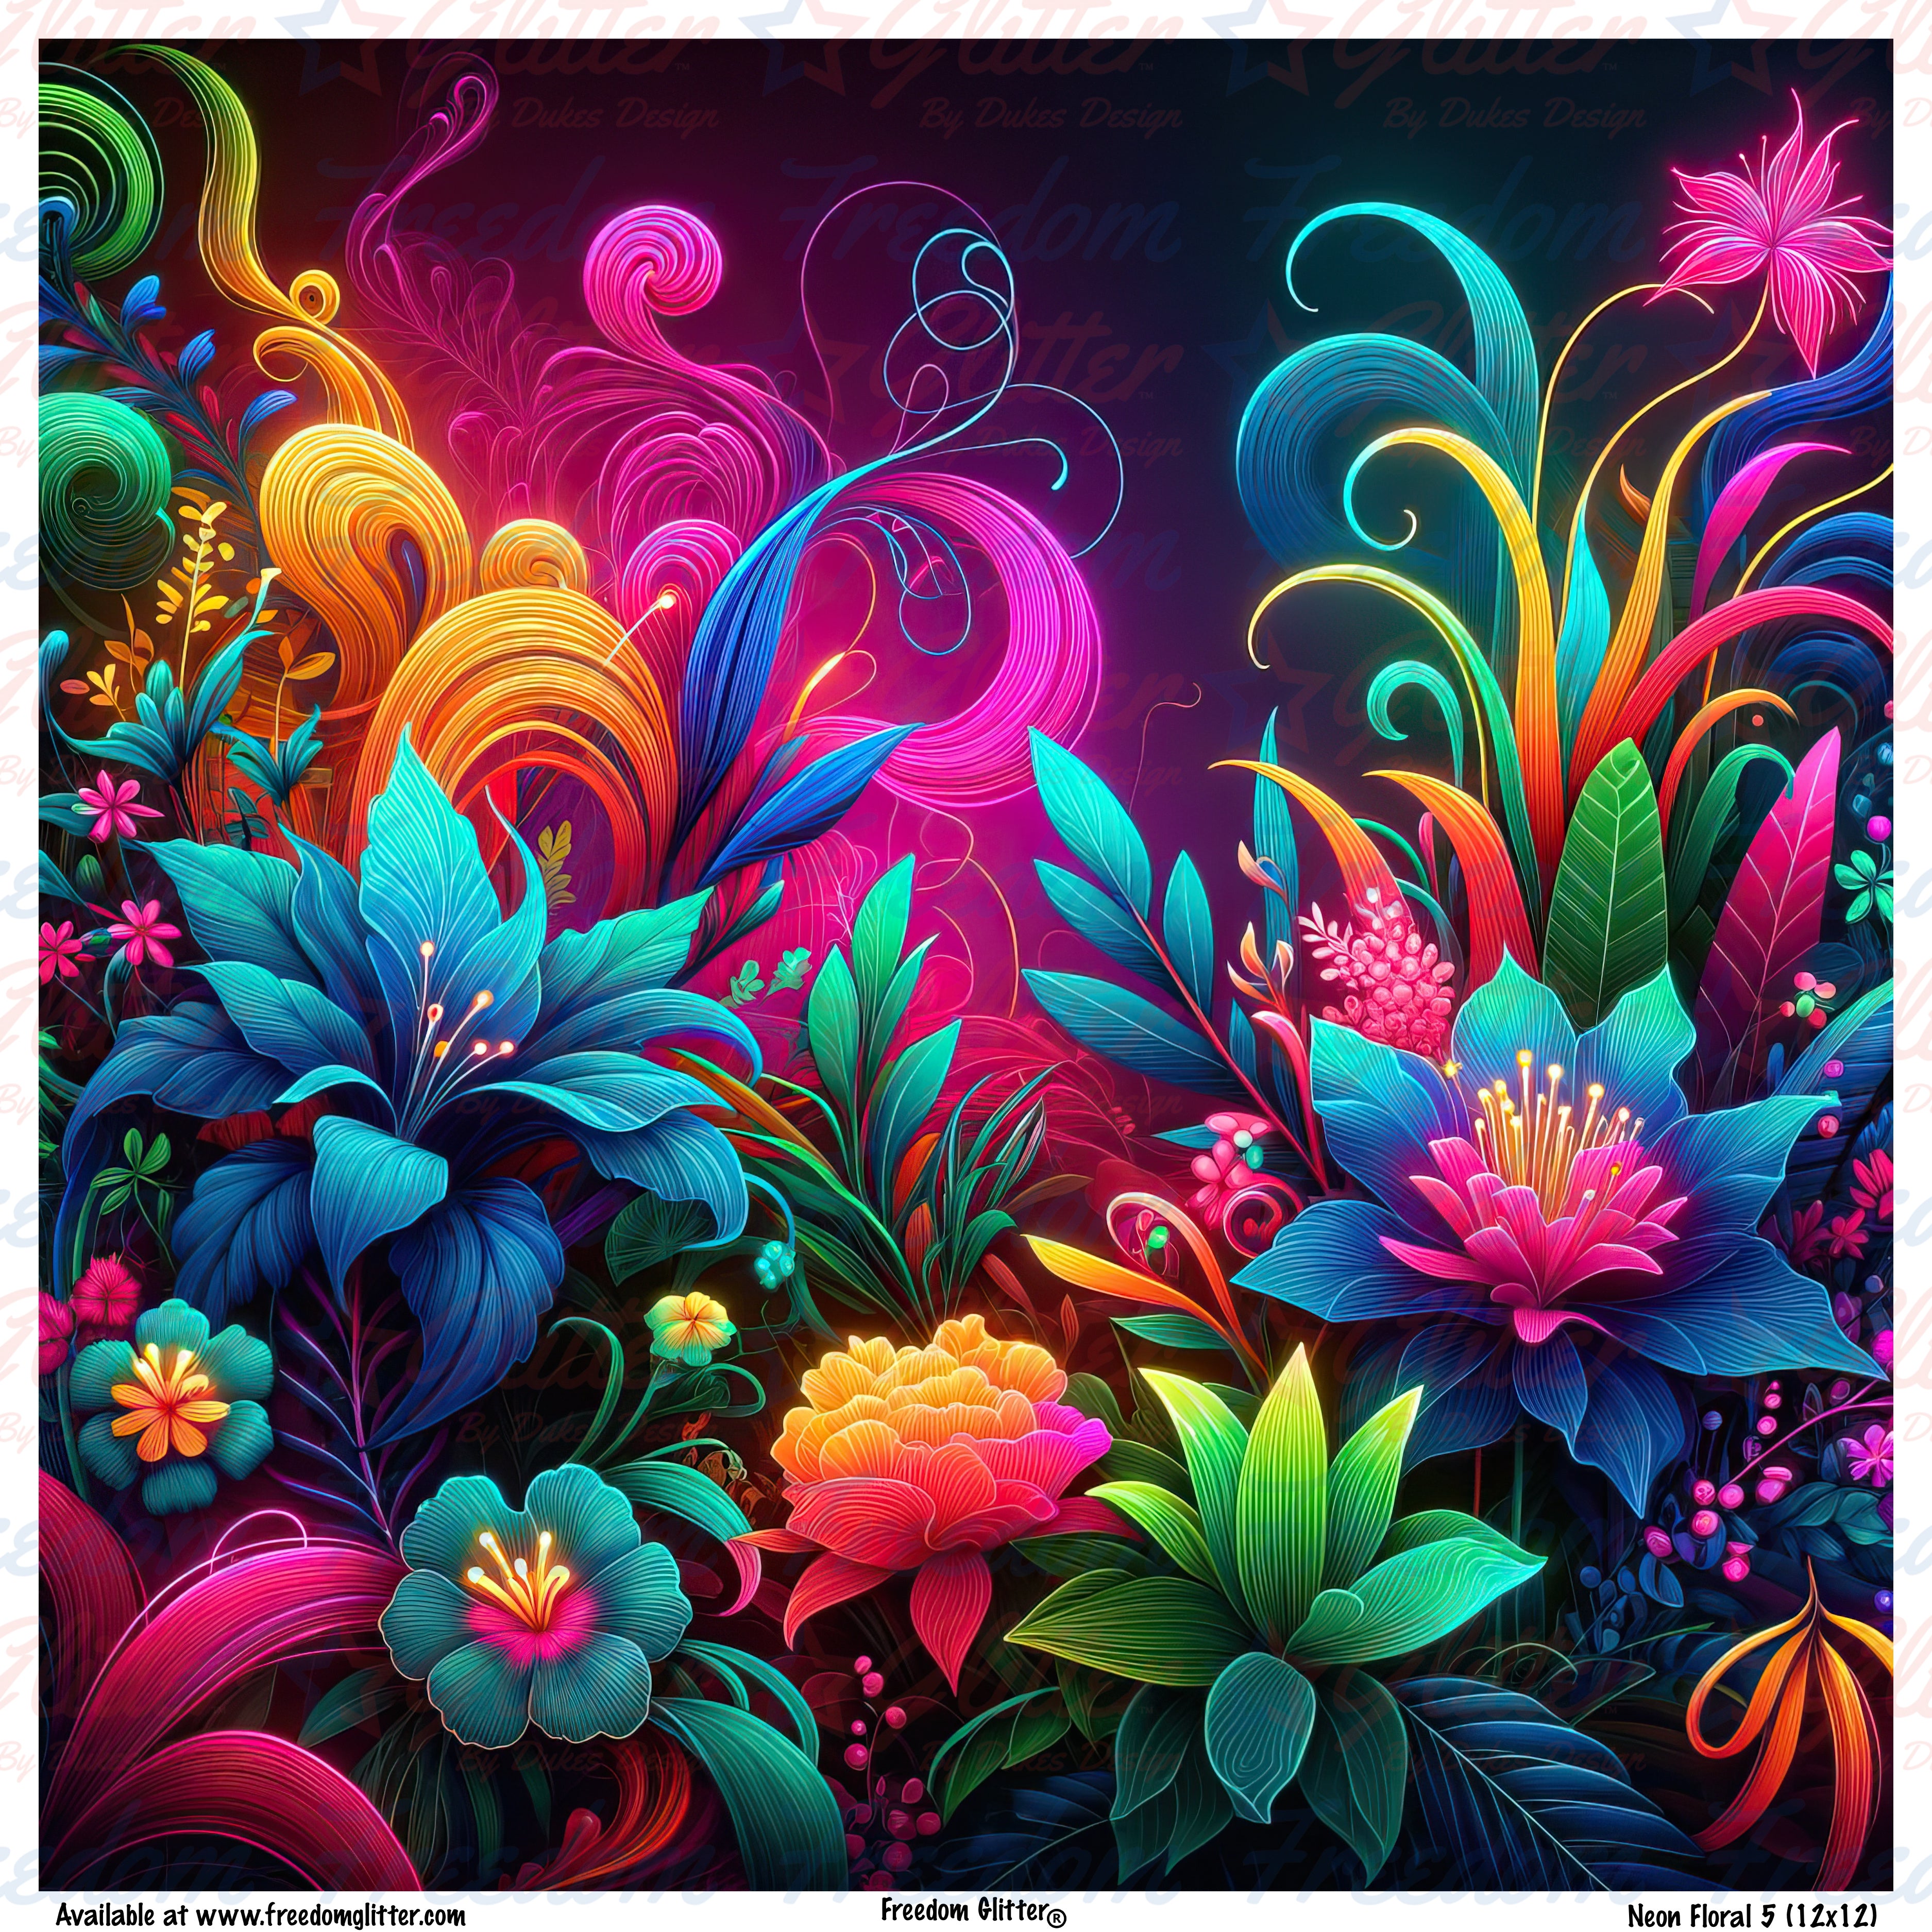 Neon Floral 5 (Printed Vinyl) – Freedom Glitter